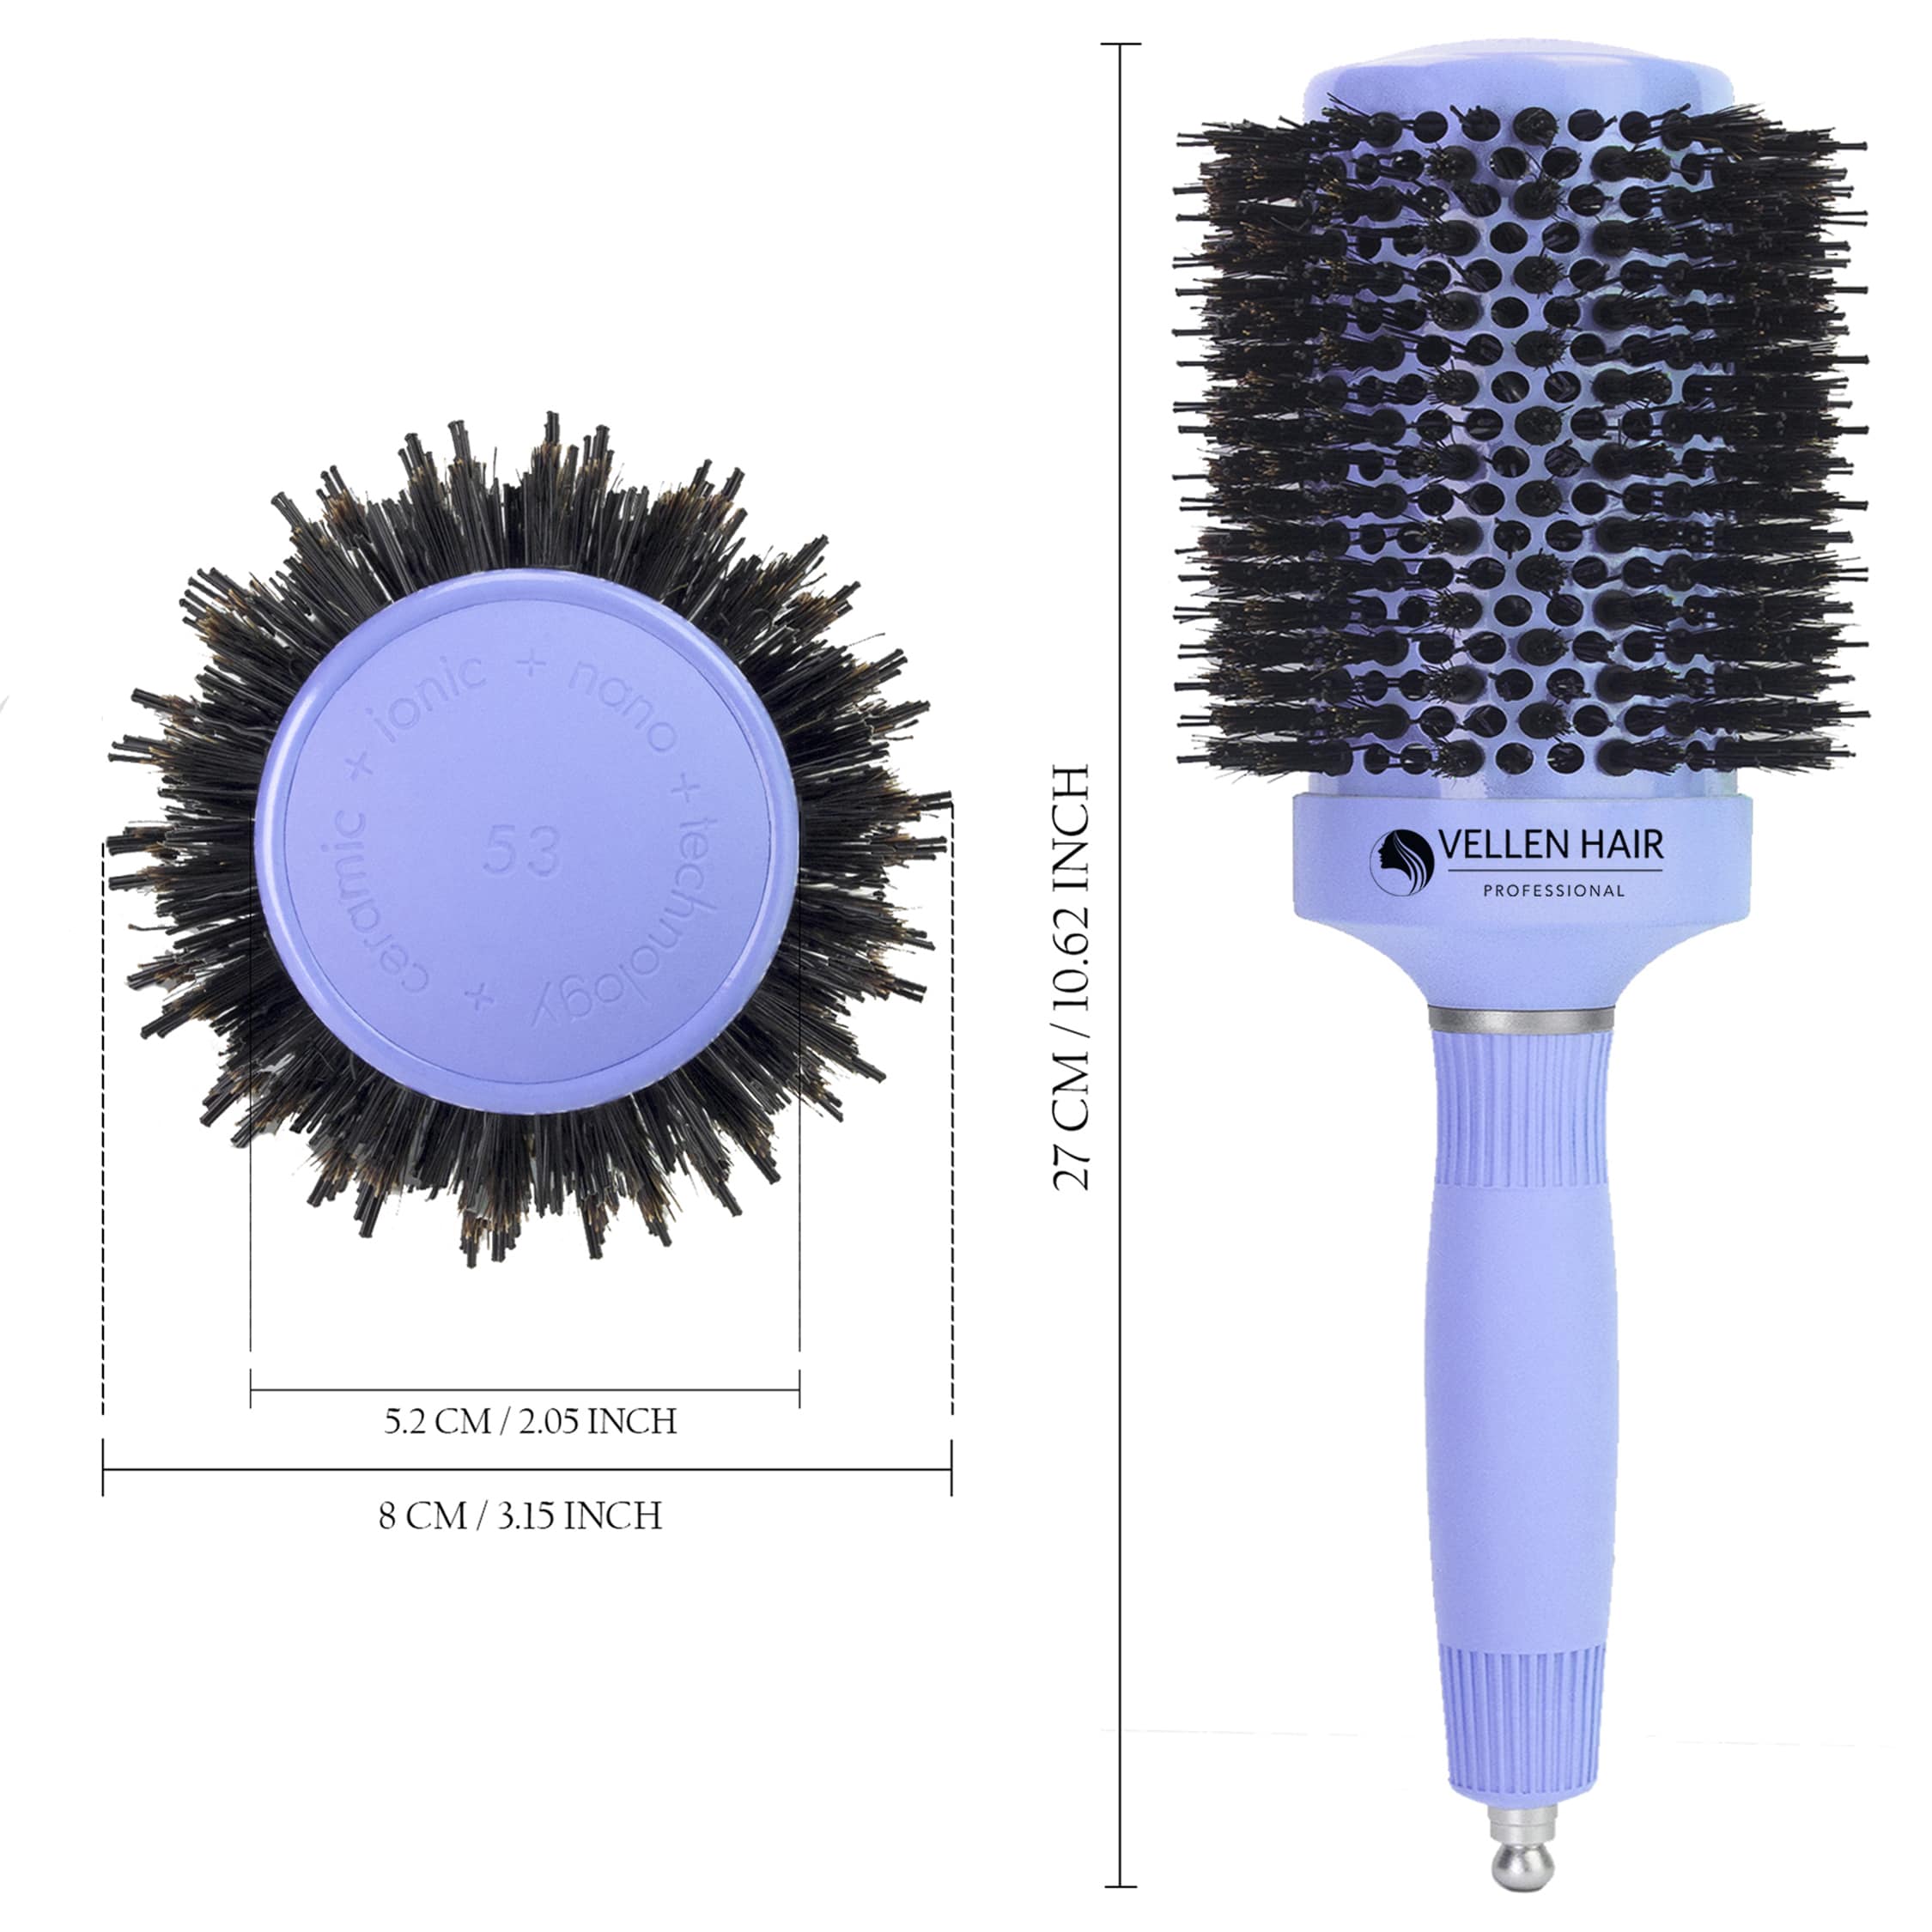 Ceramic/Ionic Round Hairbrush 2 inch / 53 mm - Violet